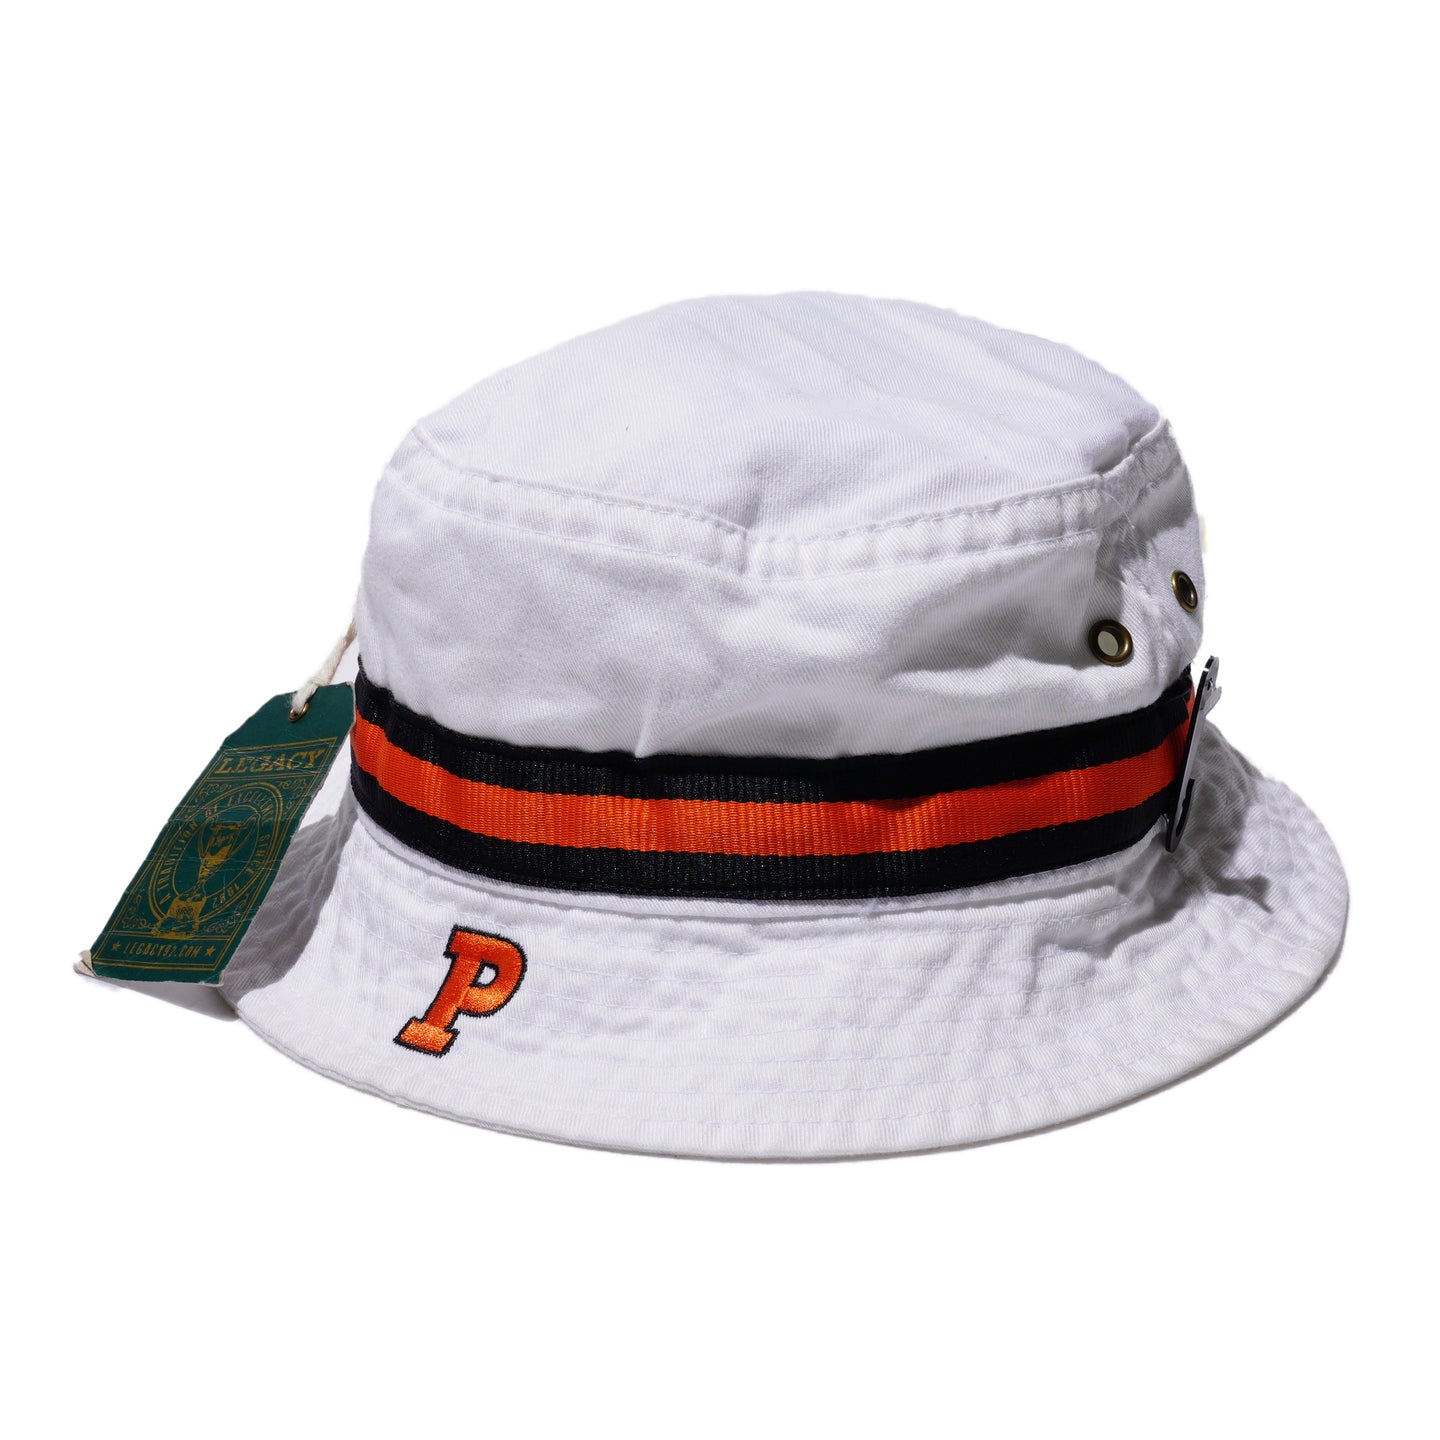 UNIVERSITY OF PRINCETON LEGACY92 BUCKET HAT